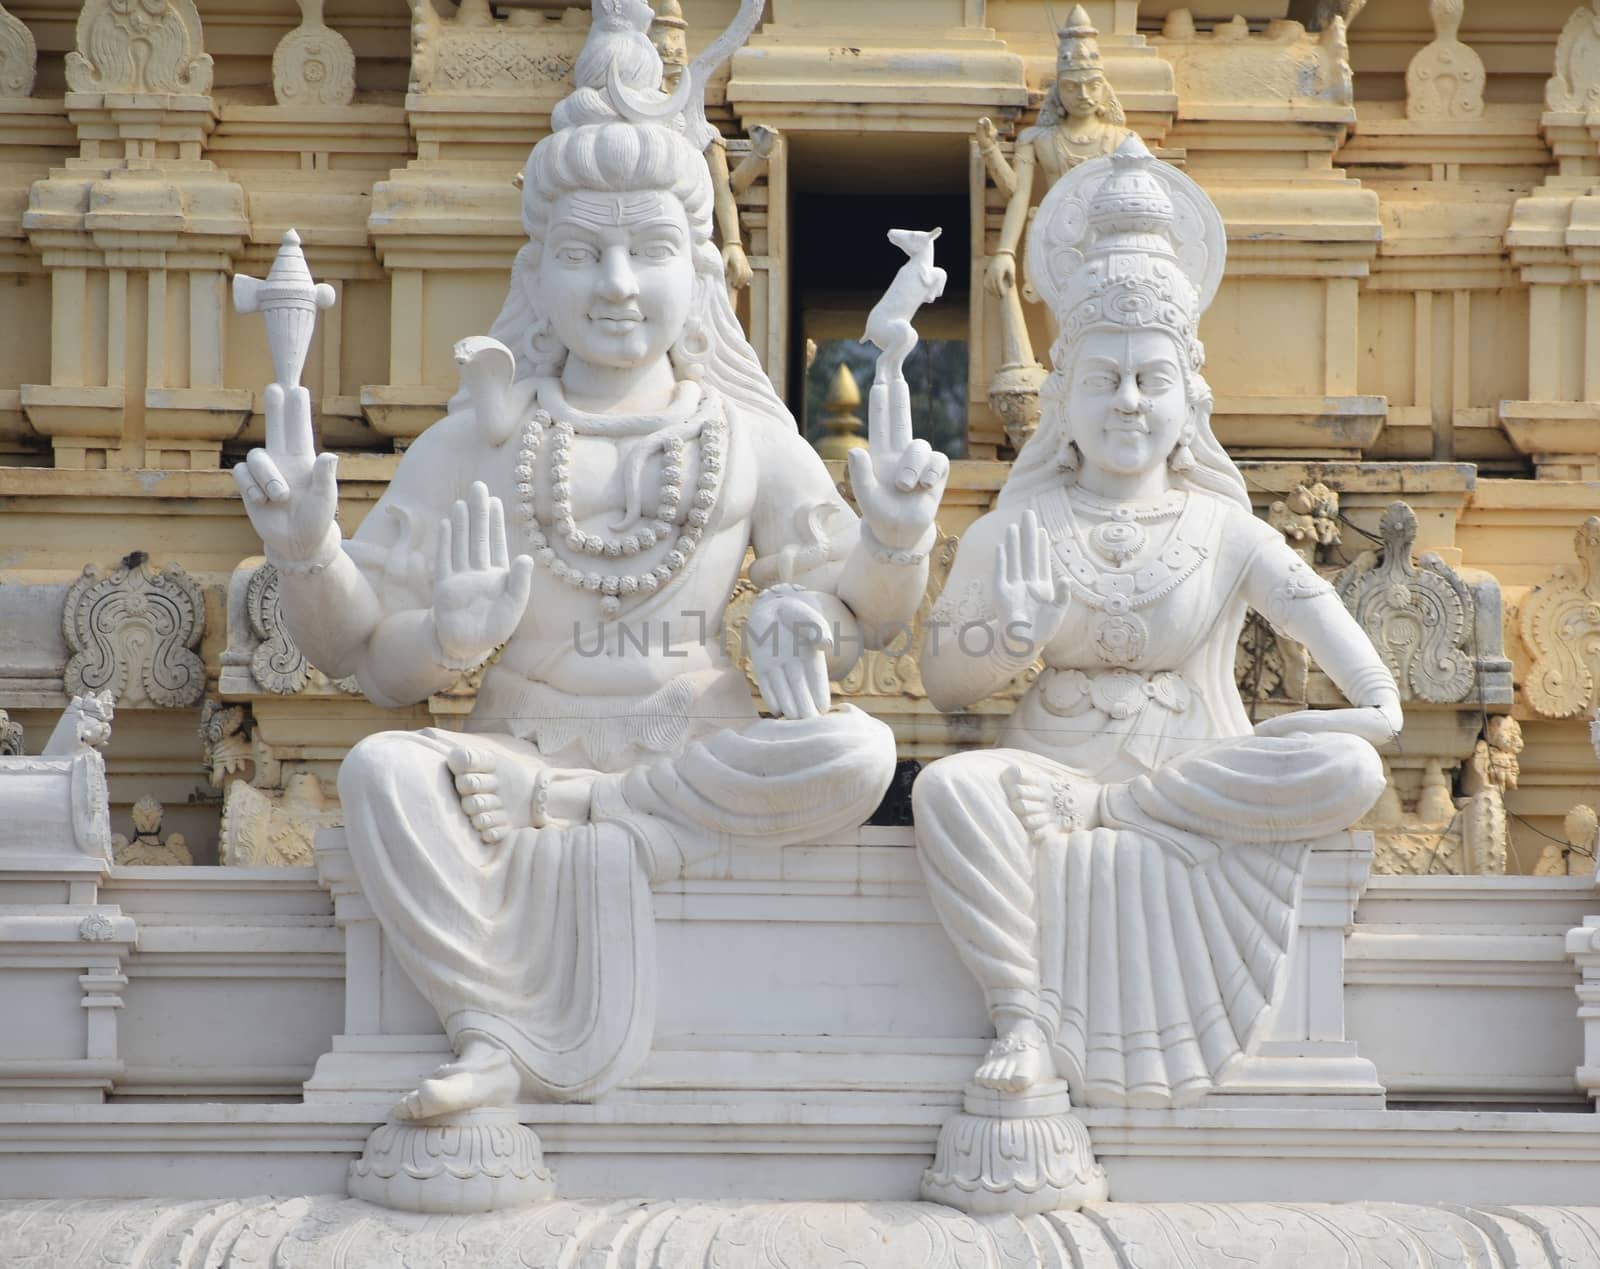 Sculpture of lard Siva, god of distraction in hindu methodology.